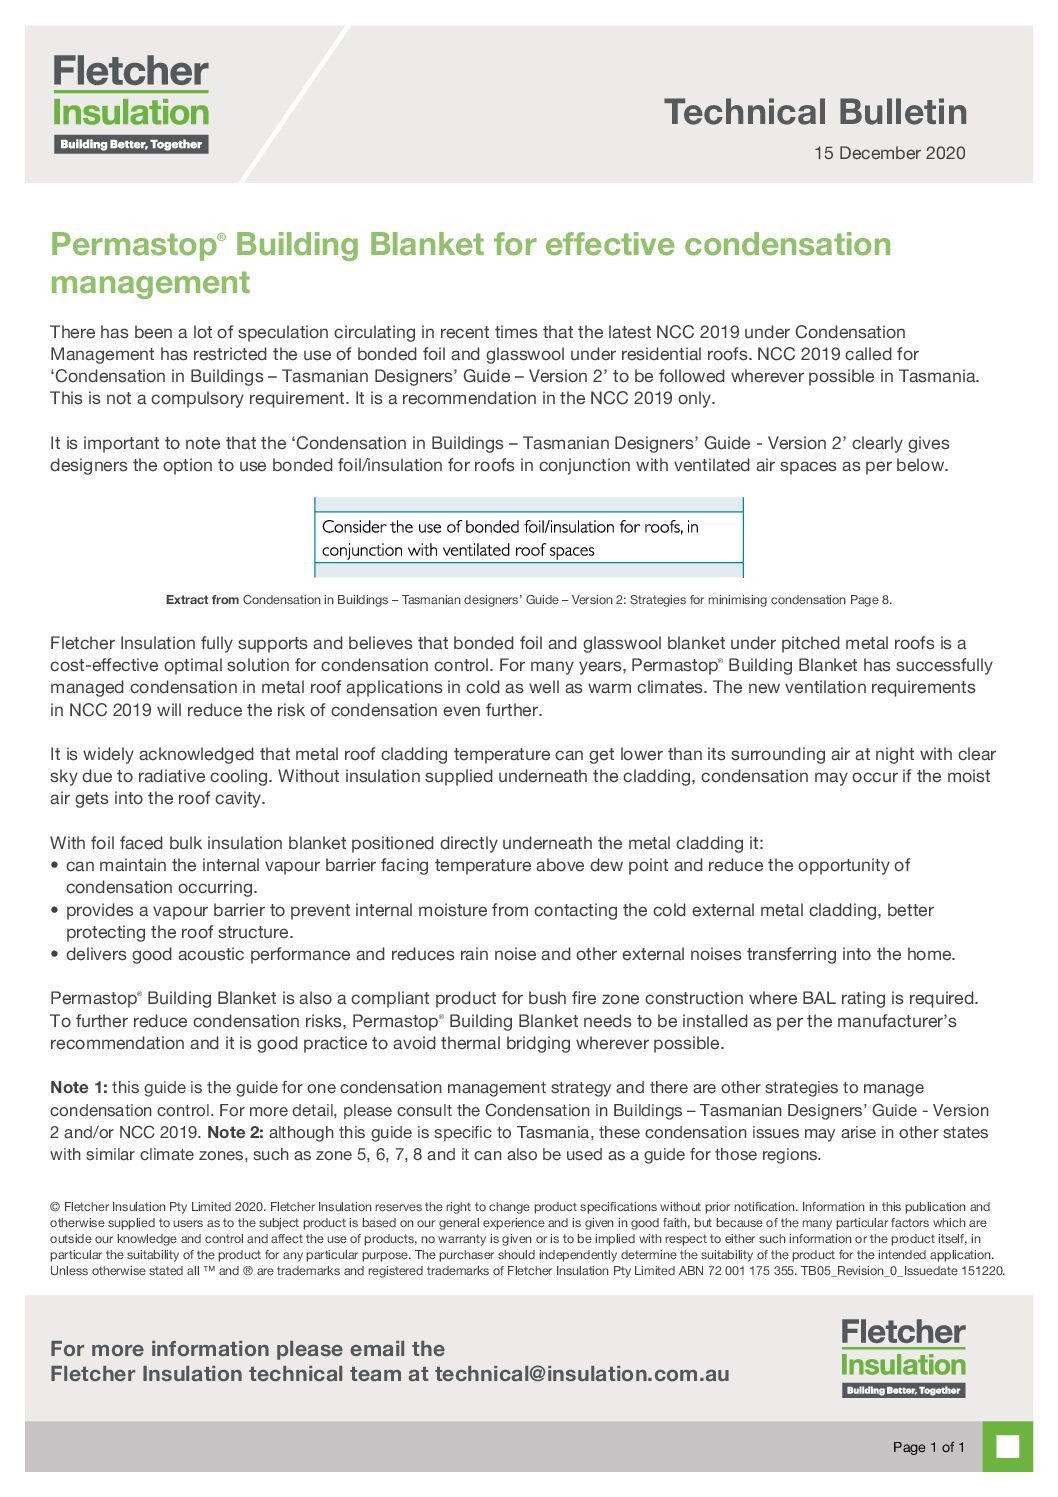 Technical Bulletin – Permastop® Building Blanket for effective condensation management